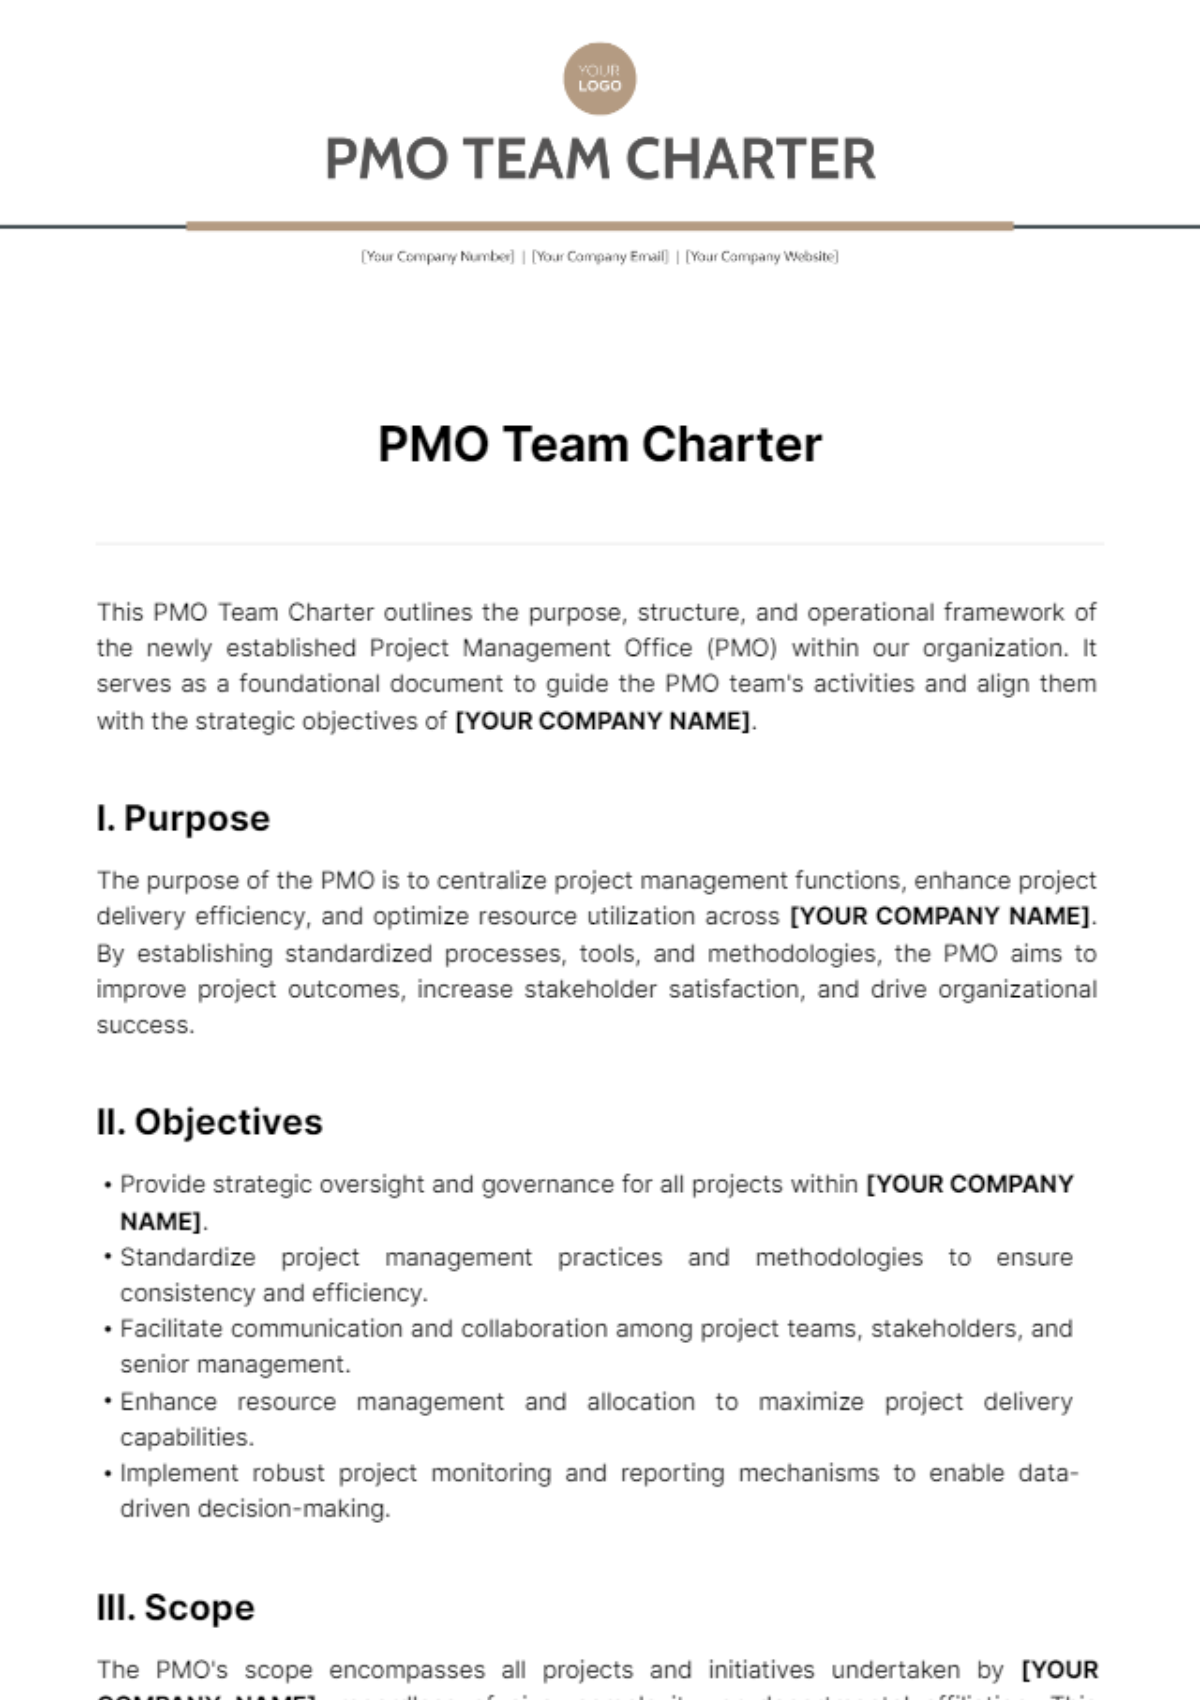 PMO Team Charter Template